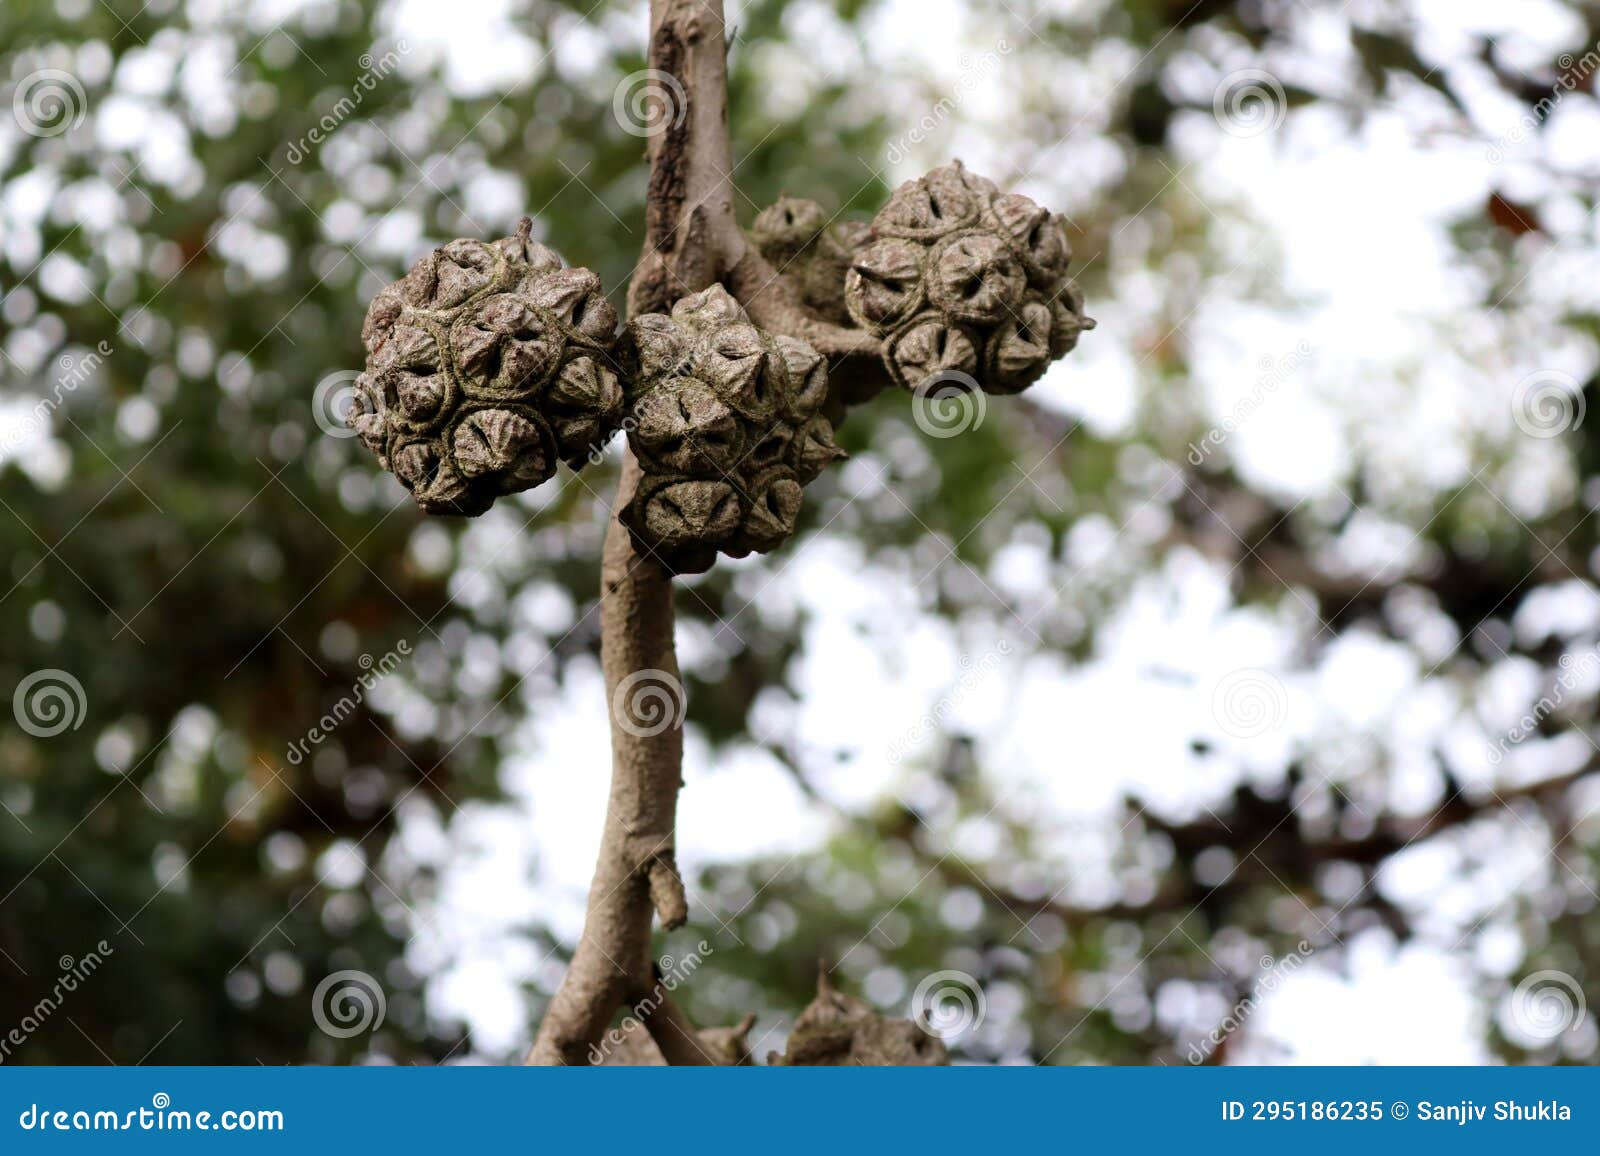 bushy yate (eucalyptus lehmannii) fruits on a tree : (pix sanjiv shukla)